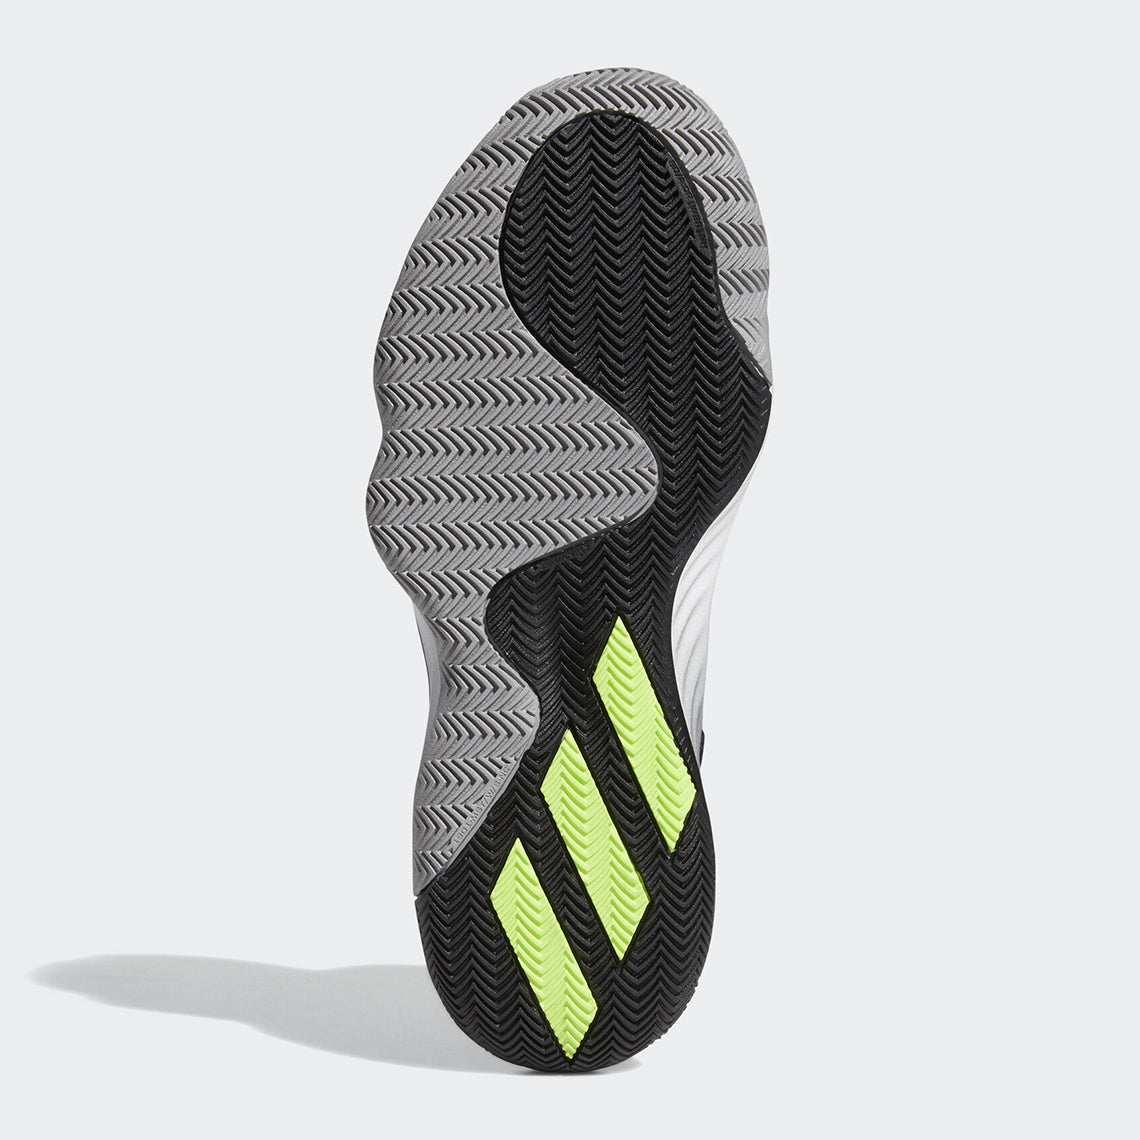 Adidas Shoe Tread Patterns | ubicaciondepersonas.cdmx.gob.mx